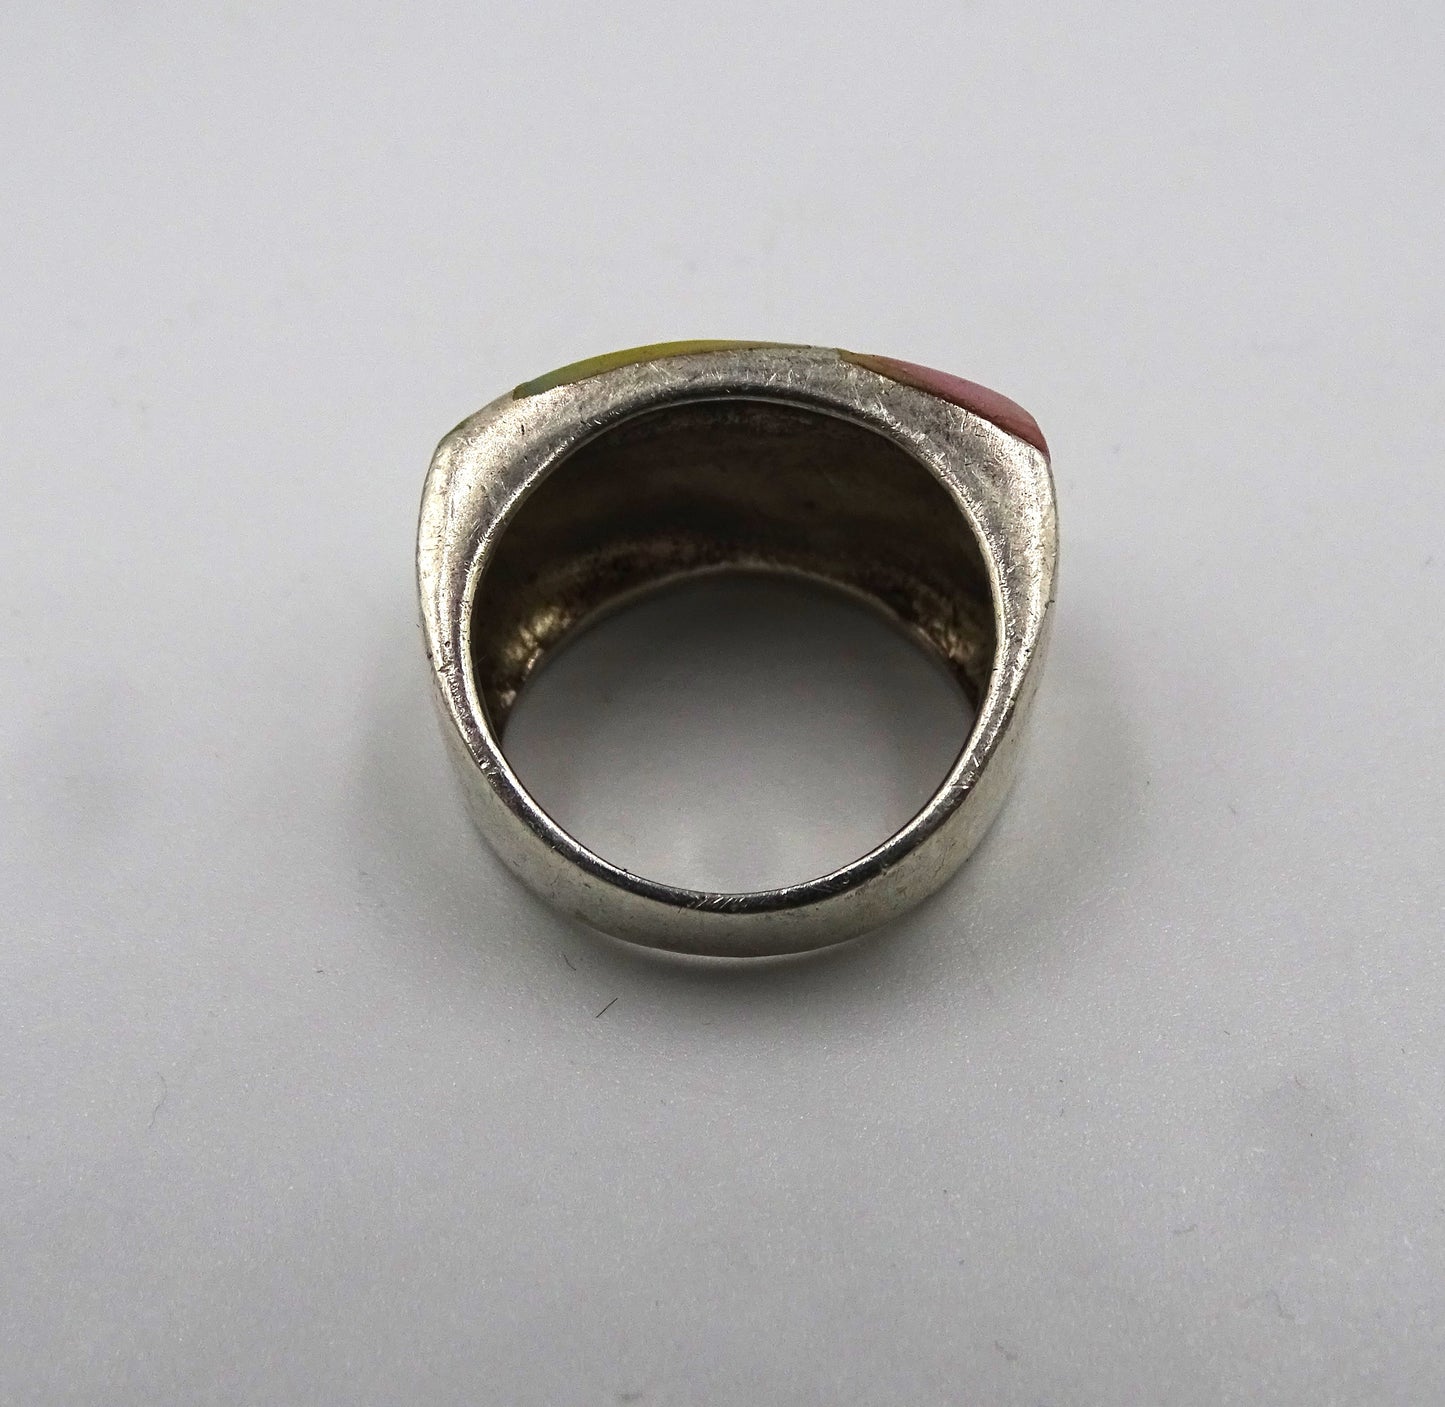 Vintage Perlmutt Mosaik Band Ring aus 925 Sterling Silber – Größe 52